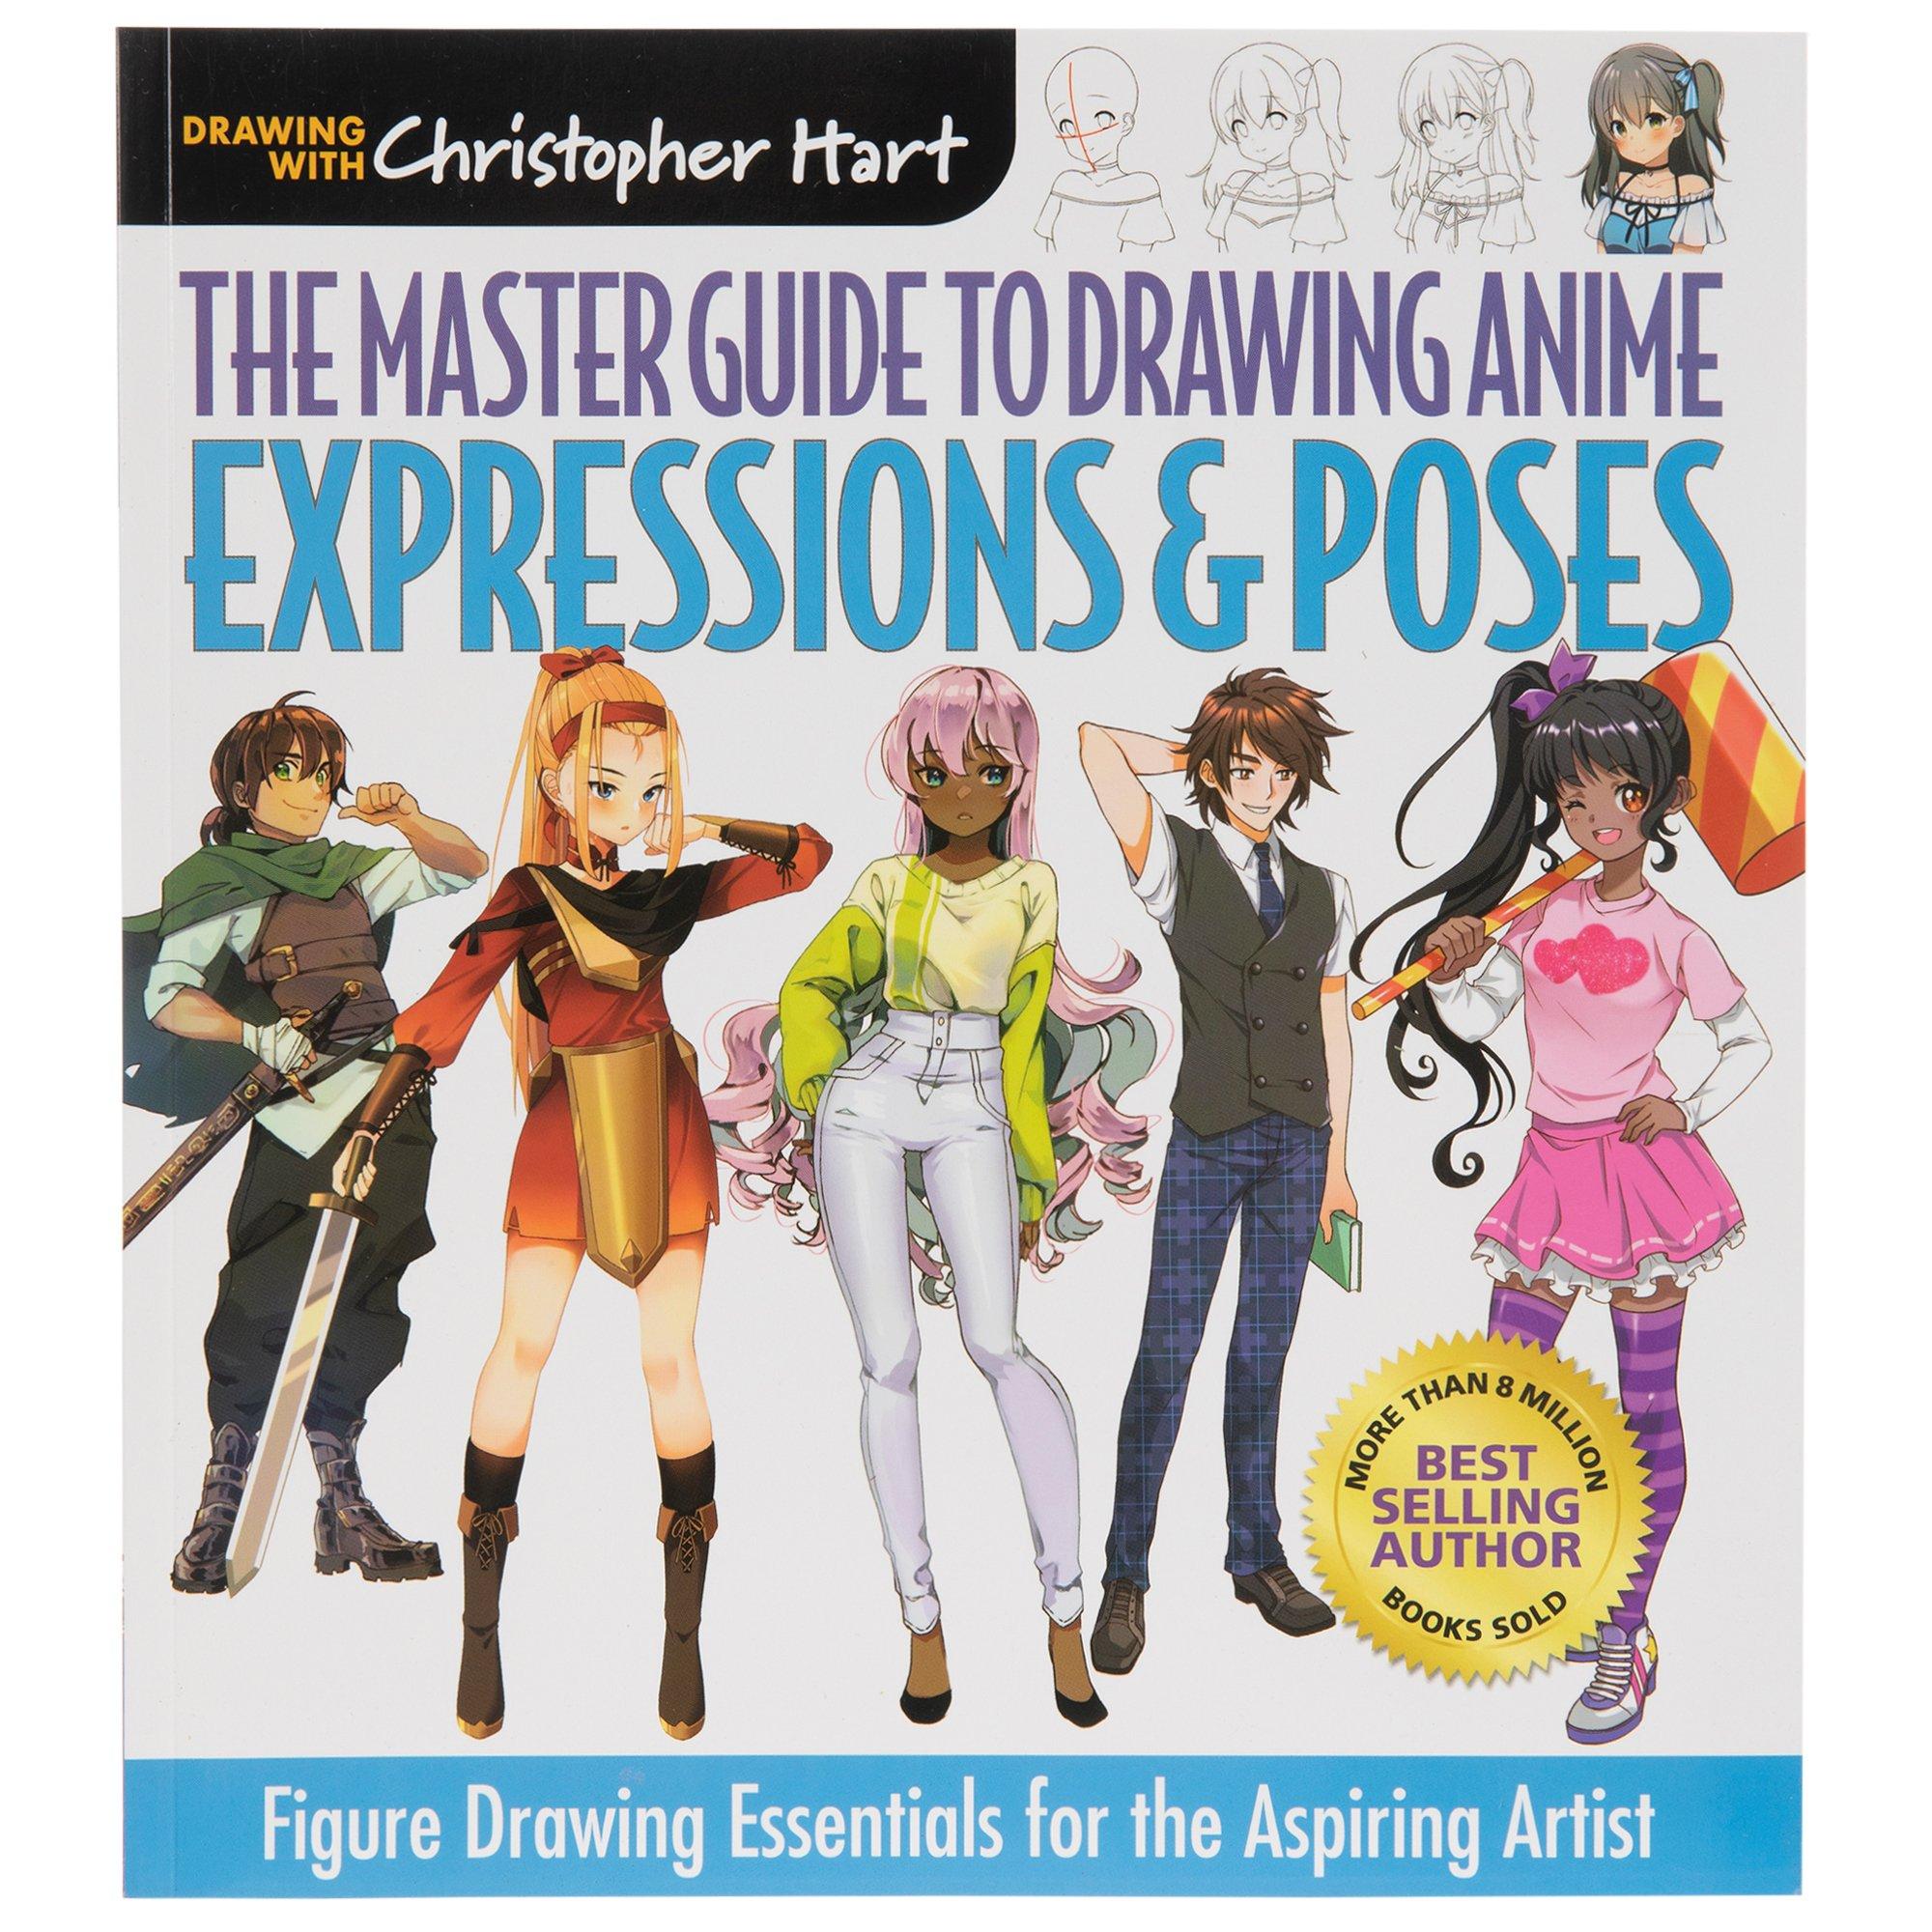 Art Supplies Reviews and Manga Cartoon Sketching: Quick! Sharpen